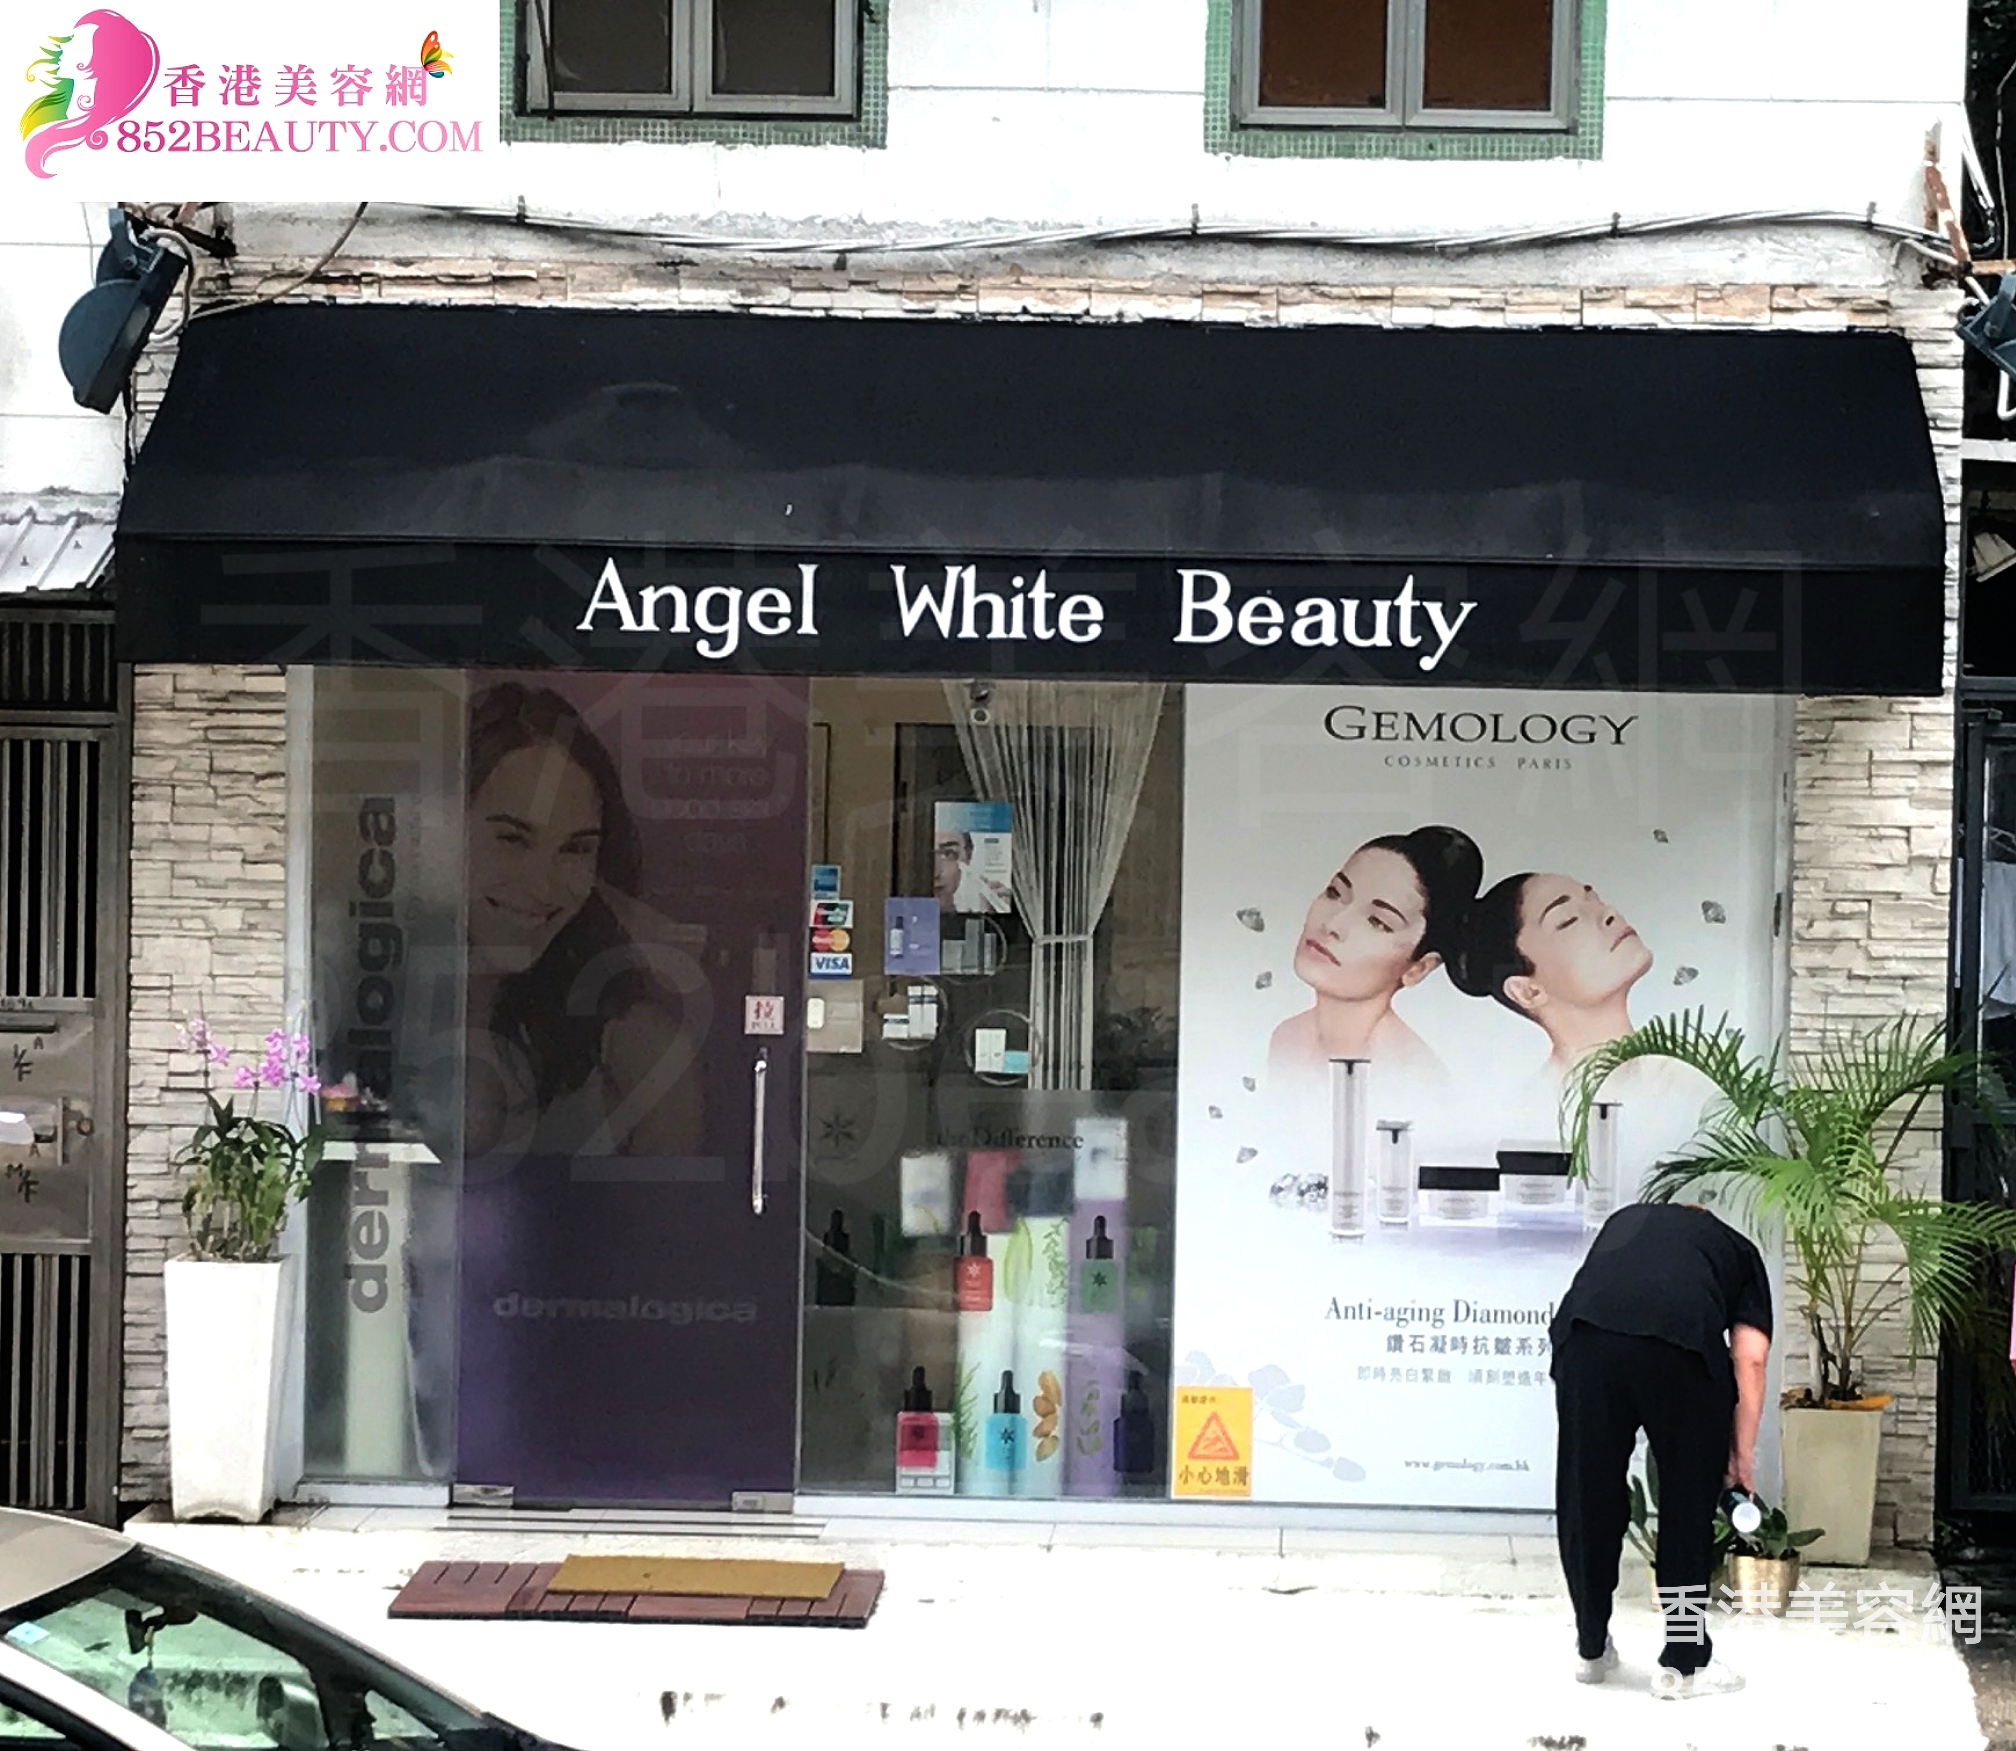 香港美容網 Hong Kong Beauty Salon 美容院 / 美容師: Angel White Beauty